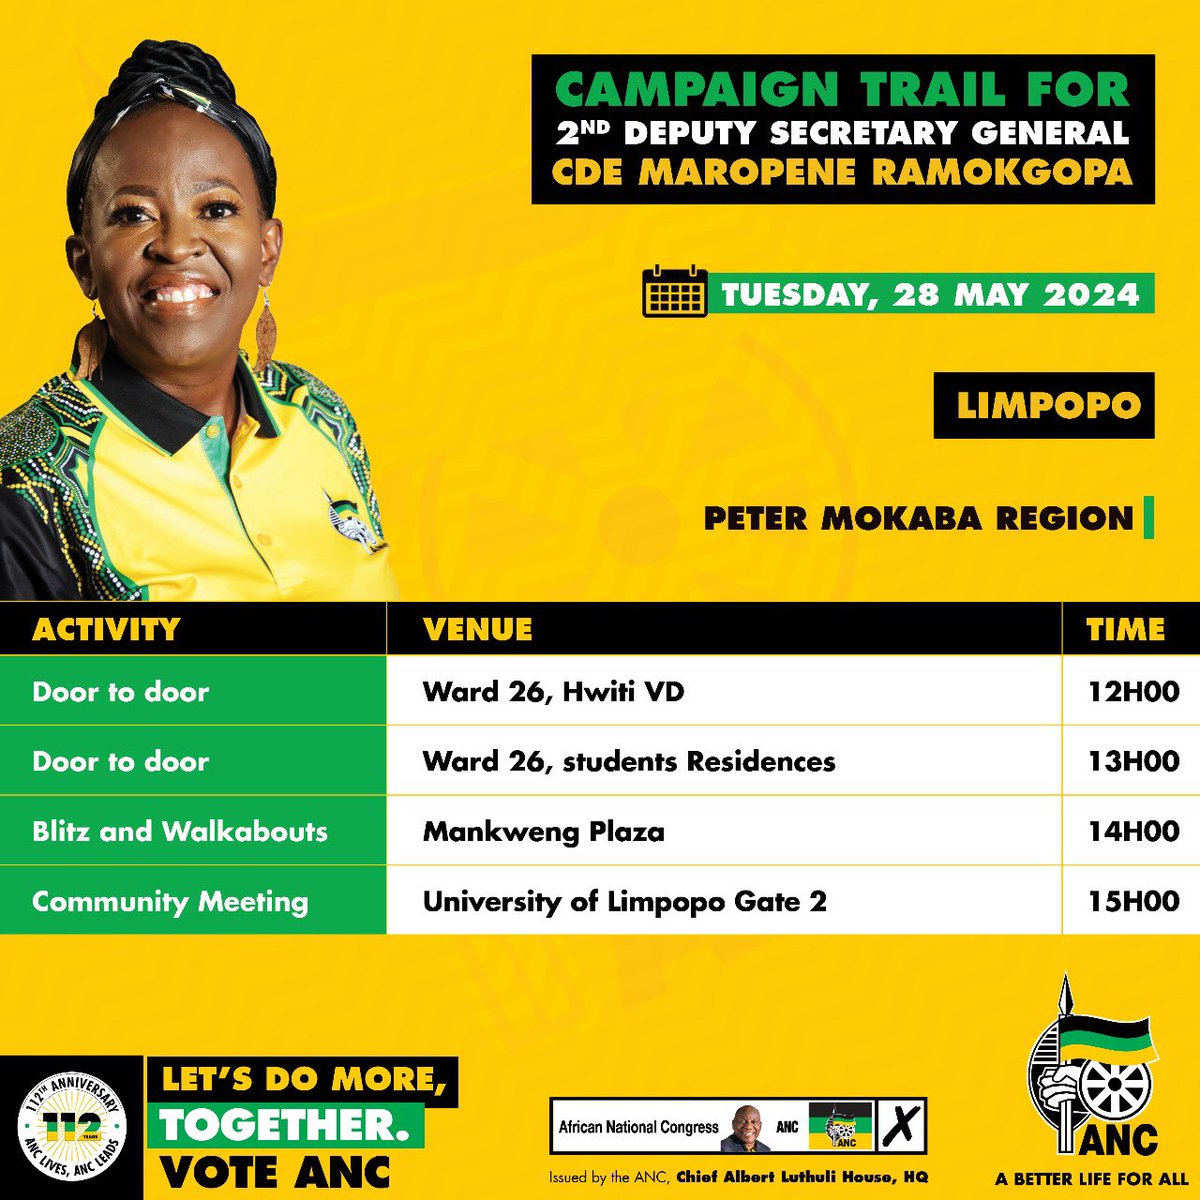 ANC 2nd Deputy Secretary-General, Cde Maropene Ramokgopa will lead the campaign trail today in the Peter Mokoba Region, Limpopo. #VoteANC2024 #LetsDoMoreTogether